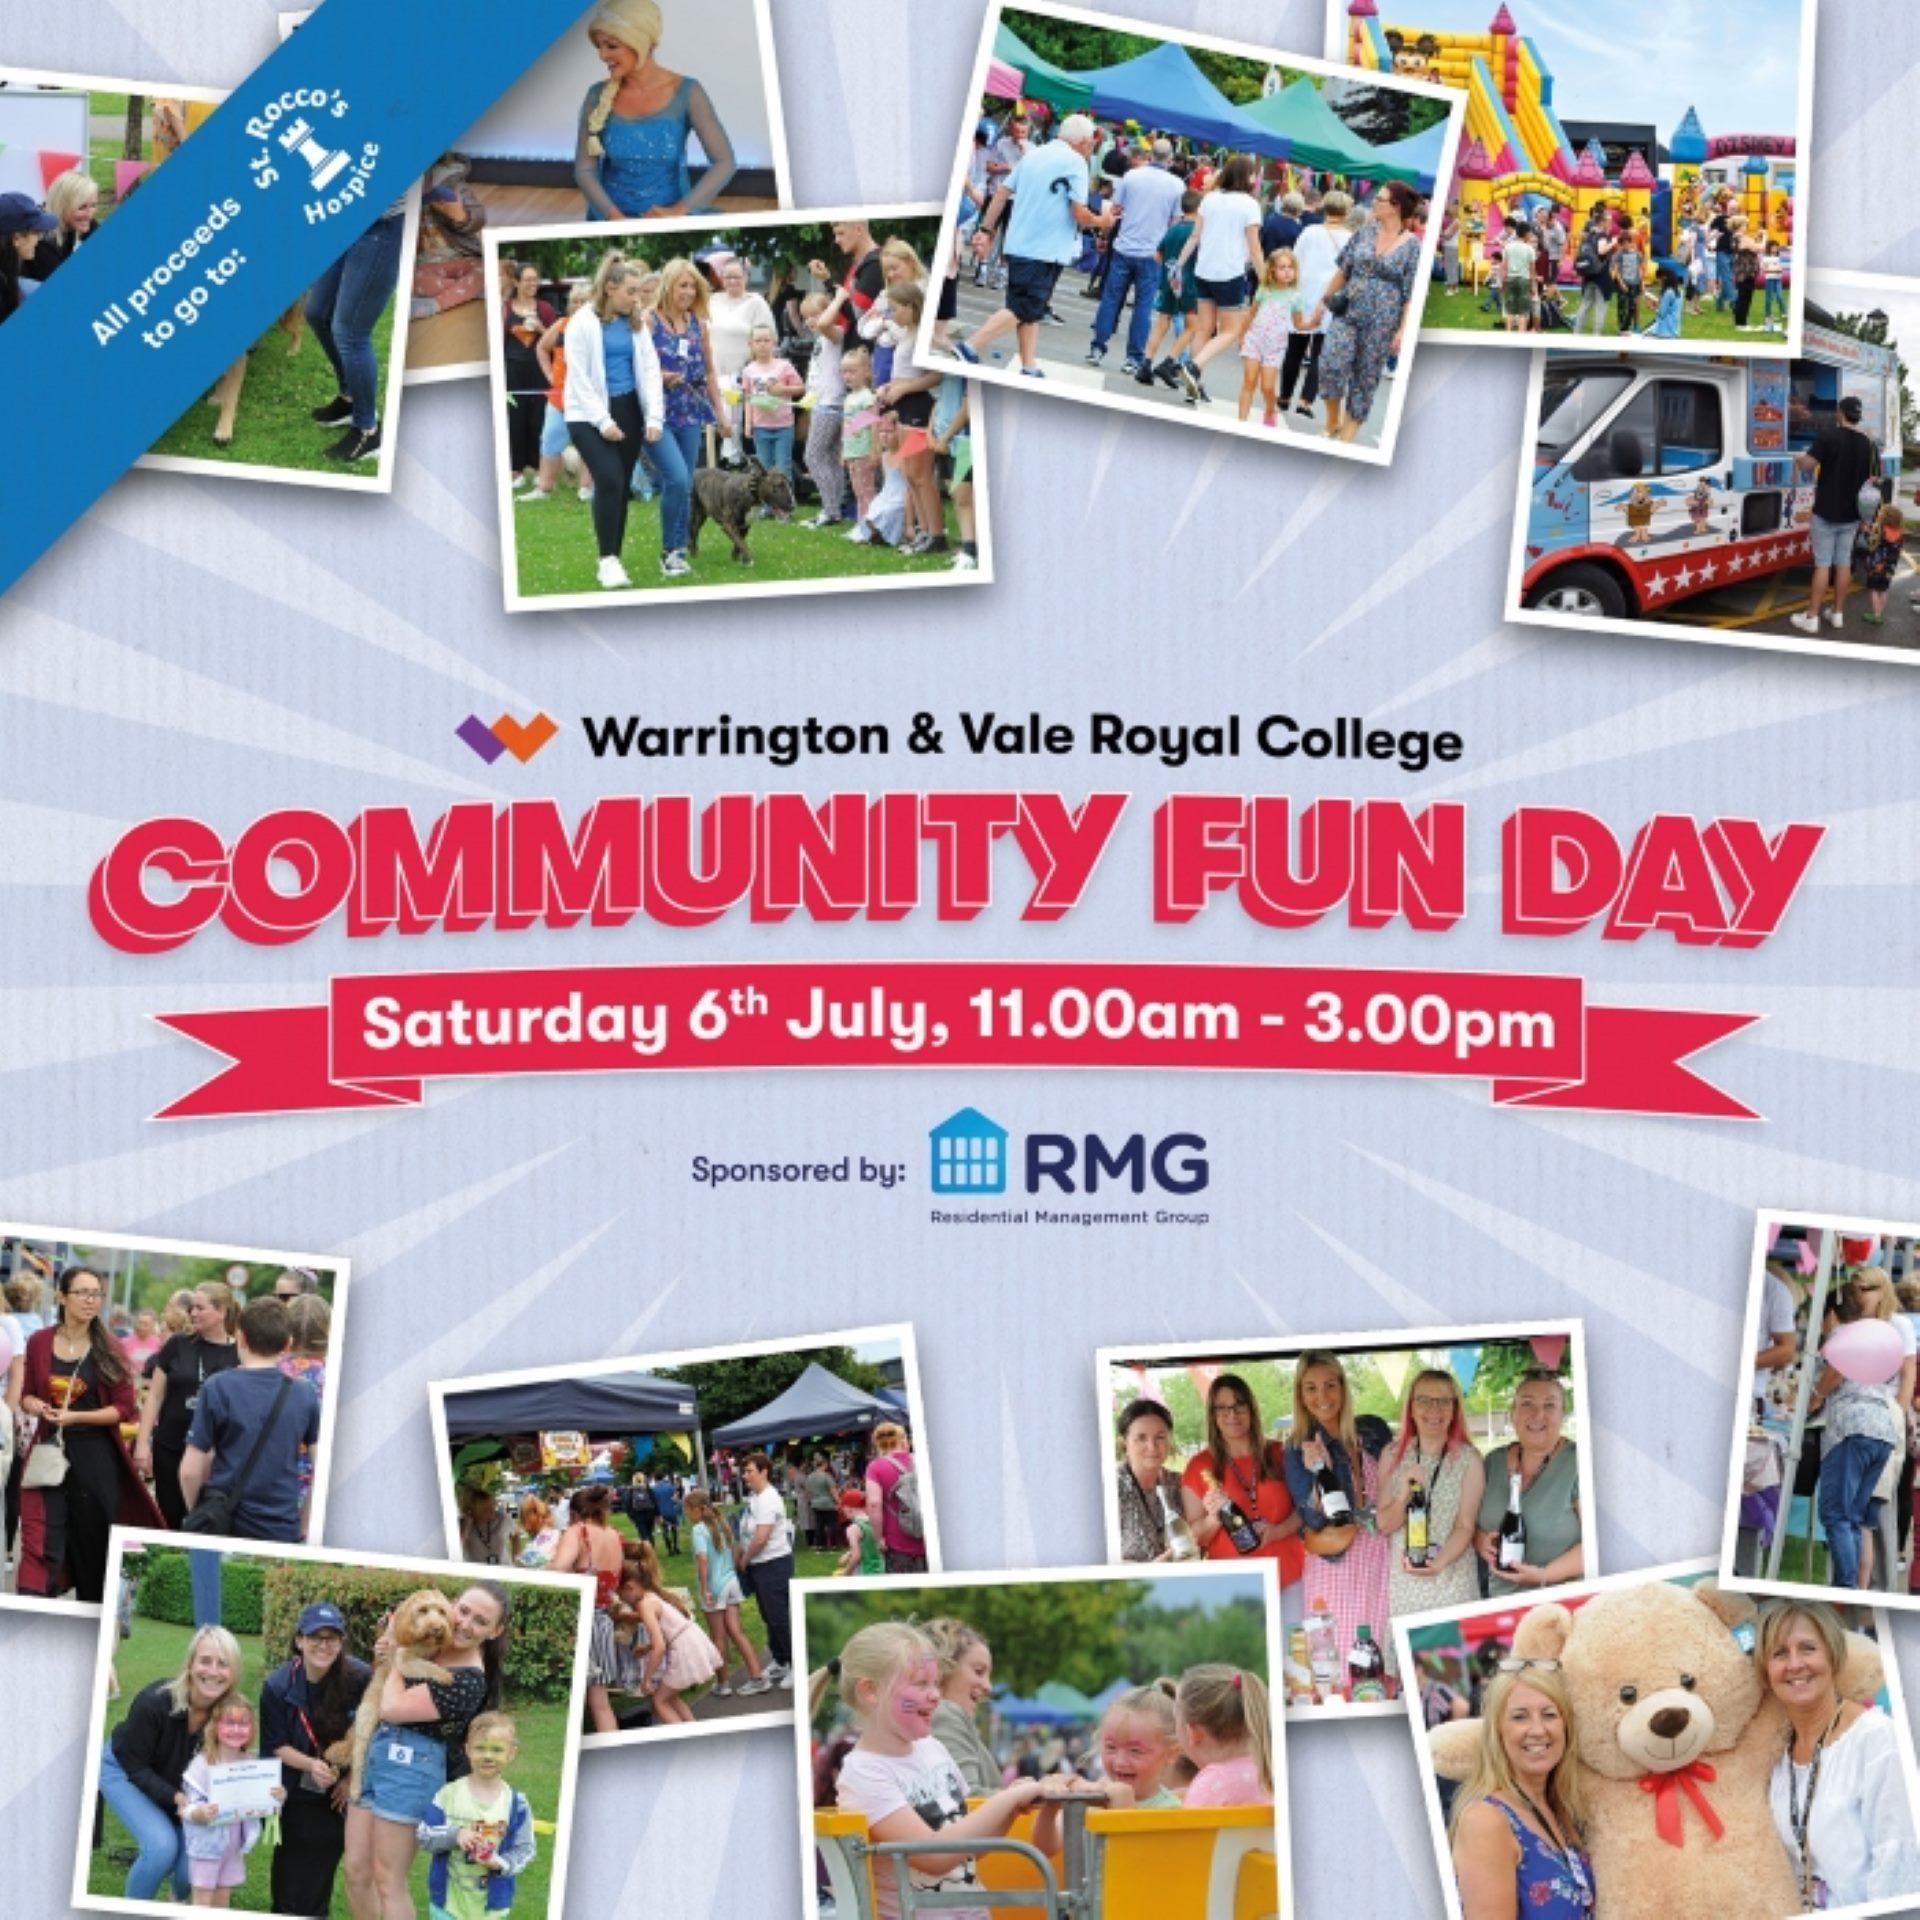 Community Fun Day Saturday 6th July 11.00am-3.00pm